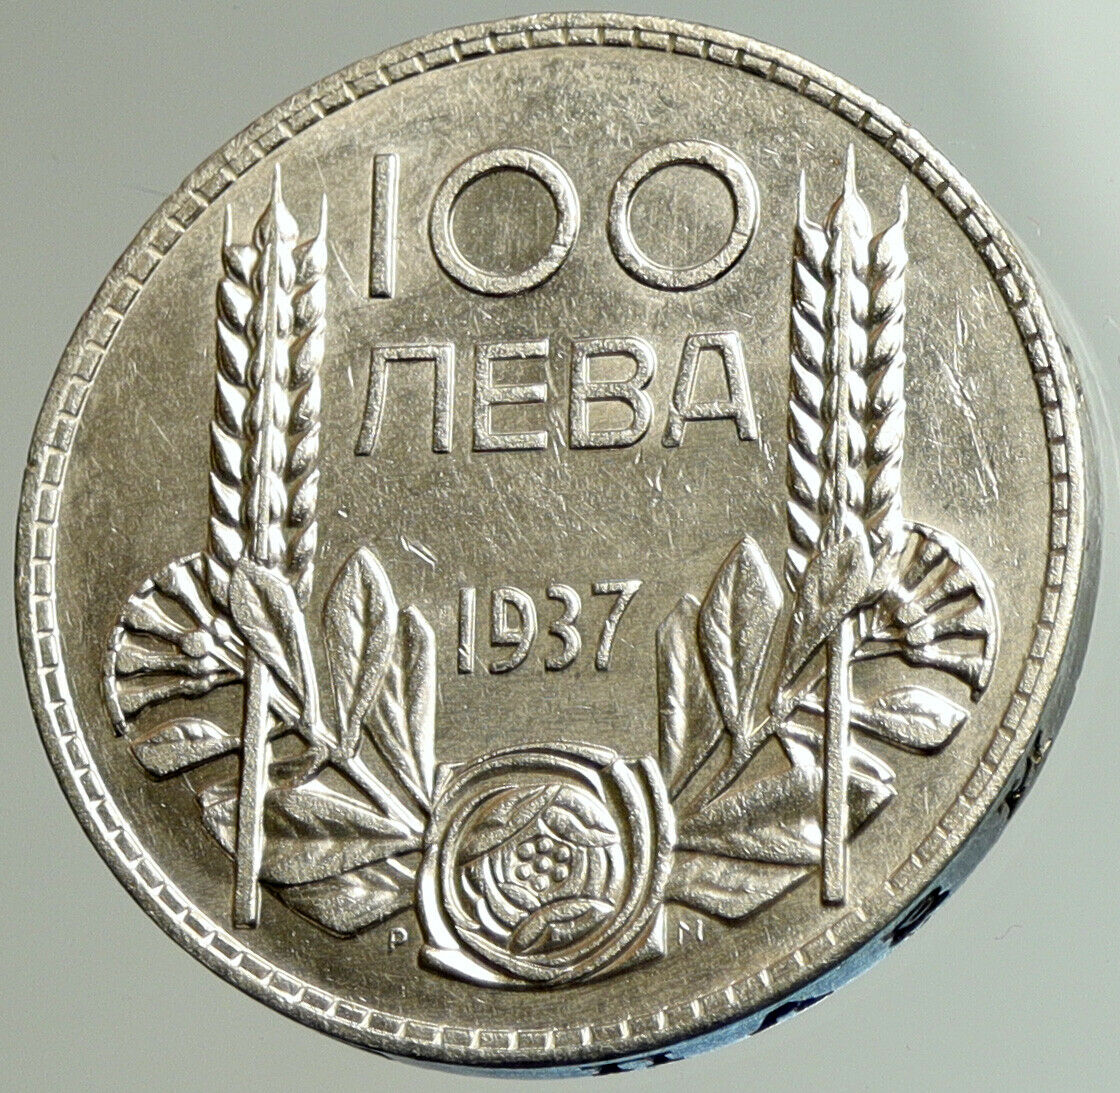 1937 Boris III Tsar of Bulgaria 100 Leva Large Old European Silver Coin i105092